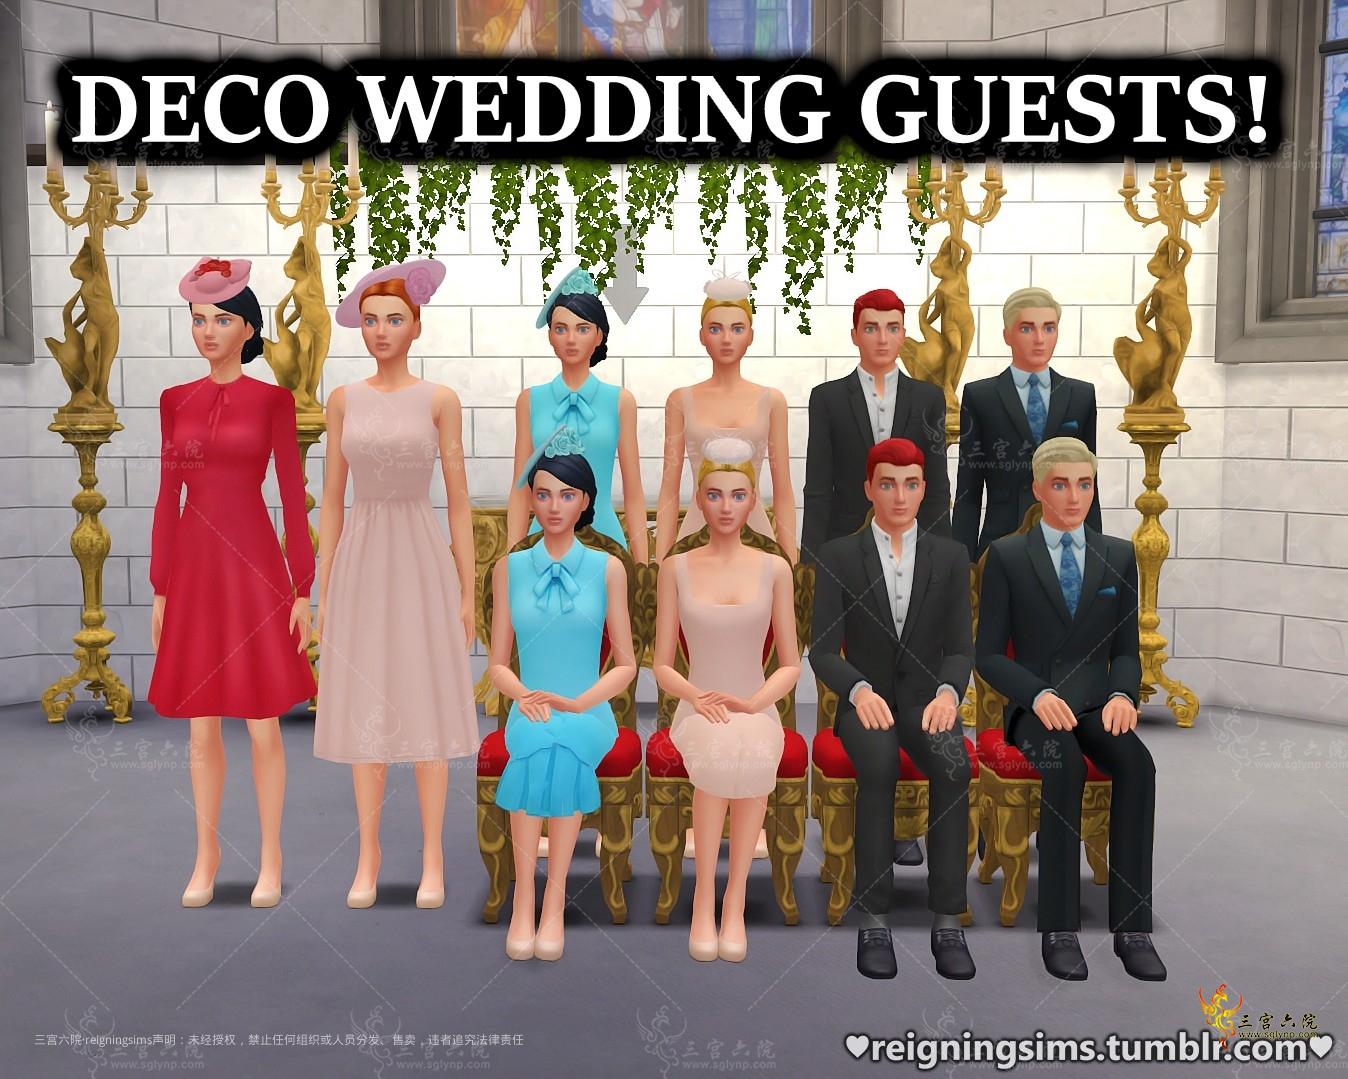 Wedding guest cc.png